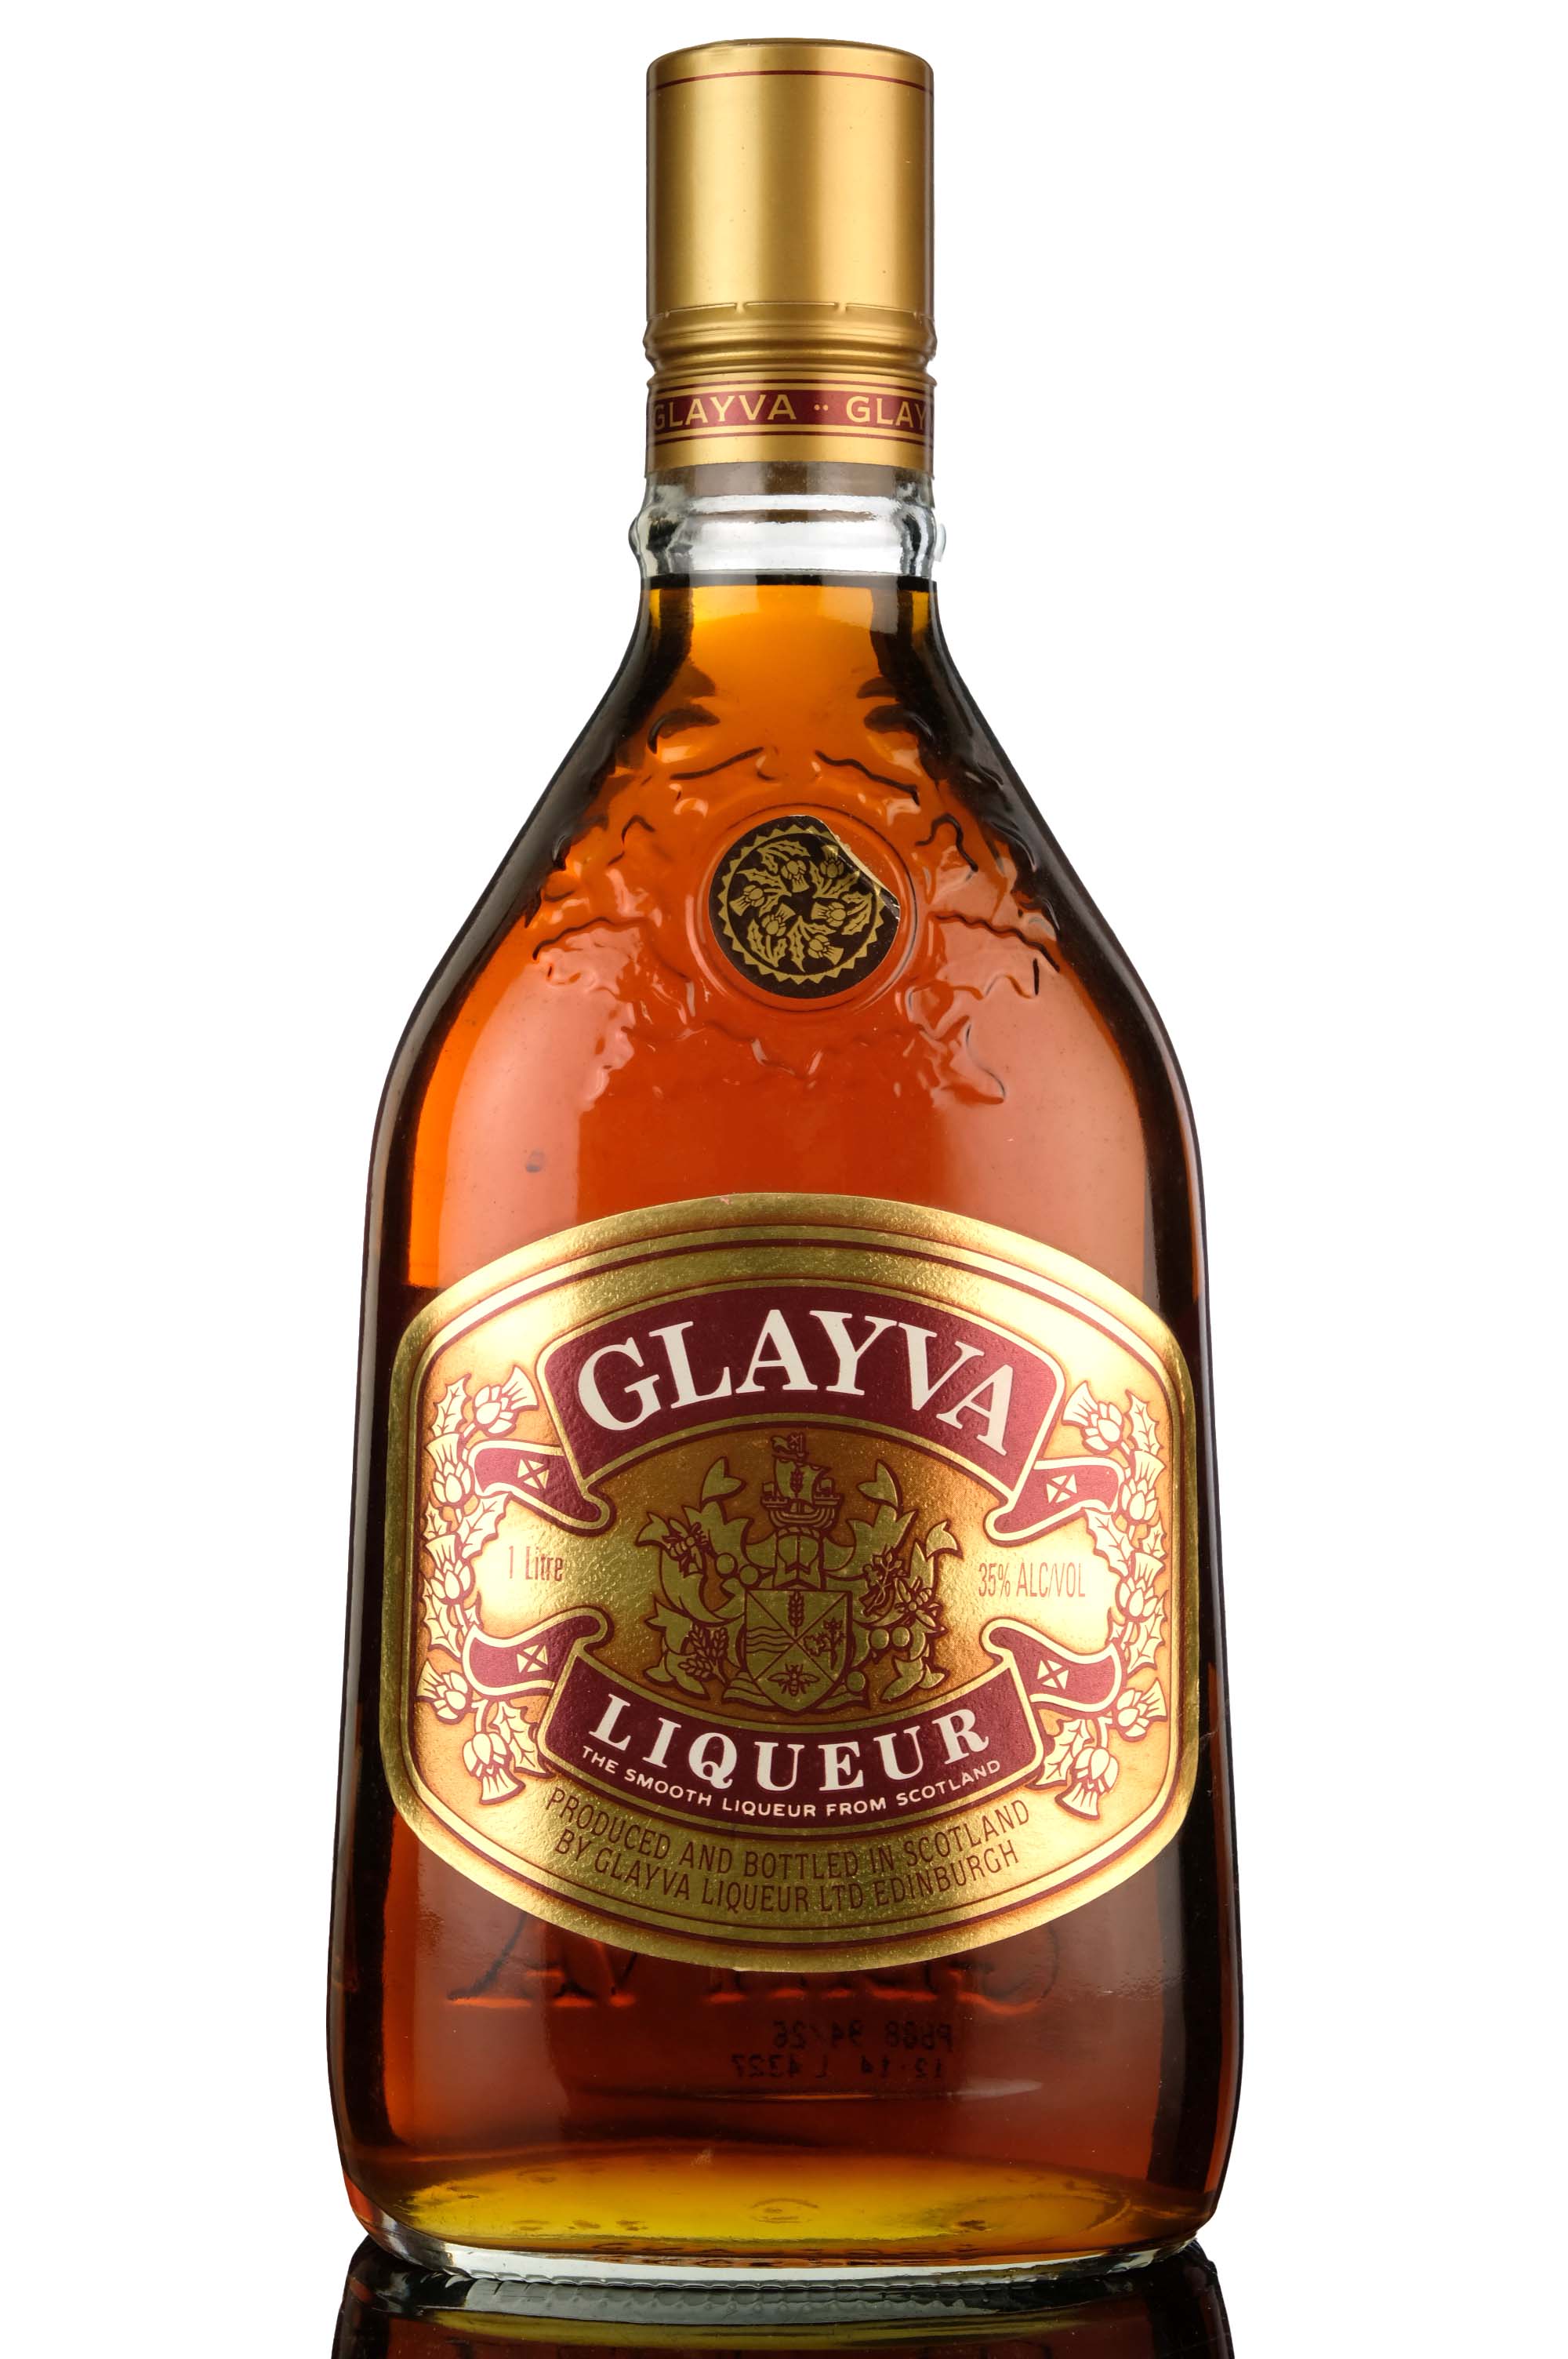 Glayva Liqueur - 1 Litre